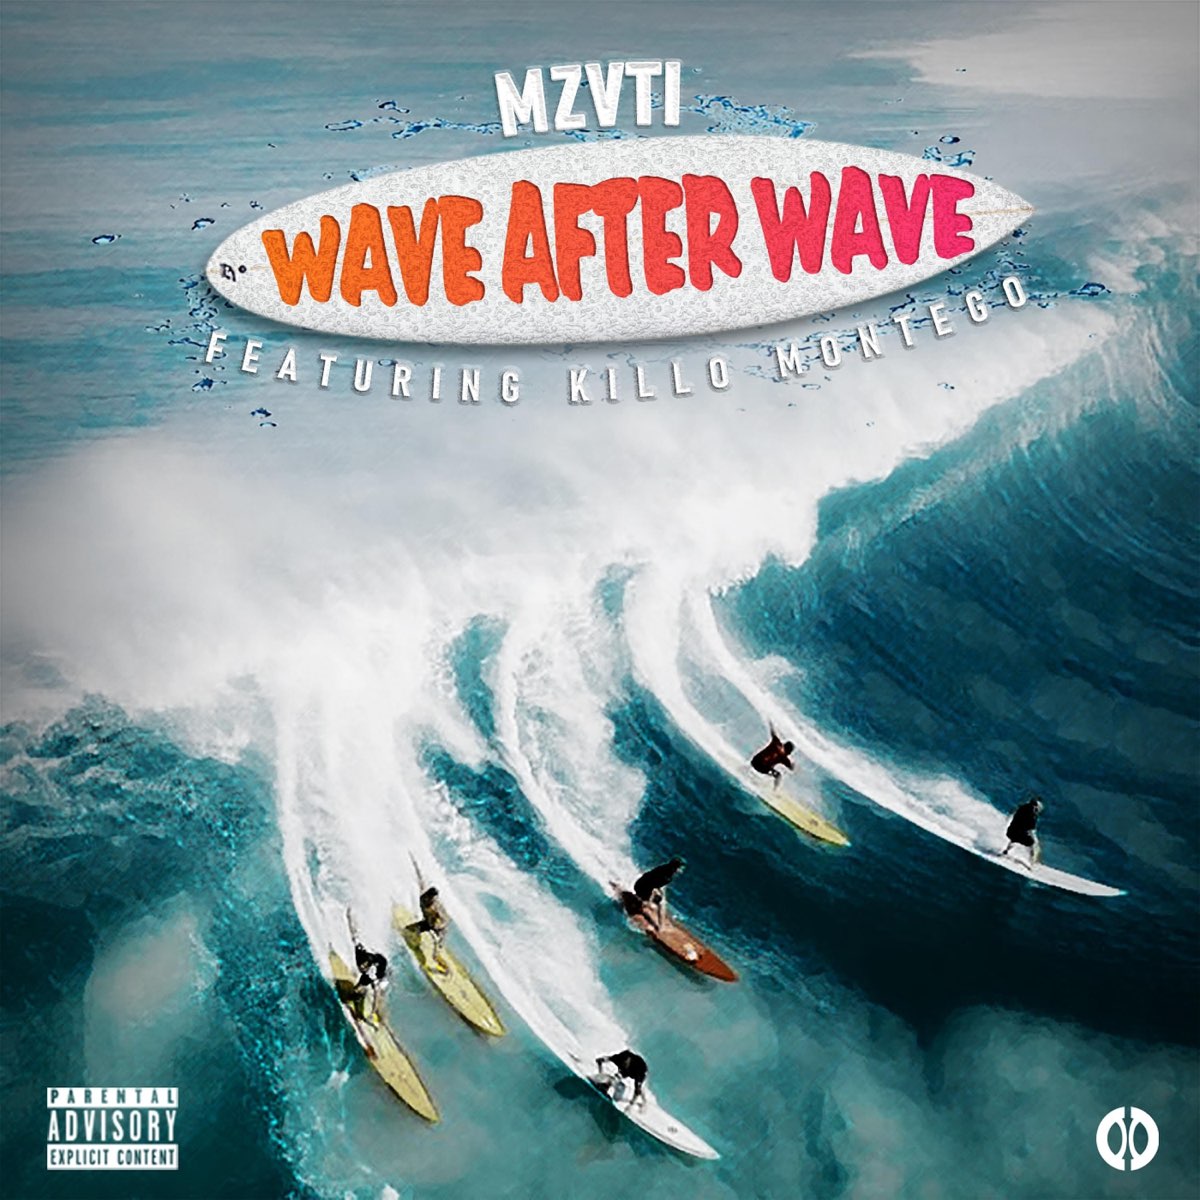 Waves feat. Wave after Wave песня.